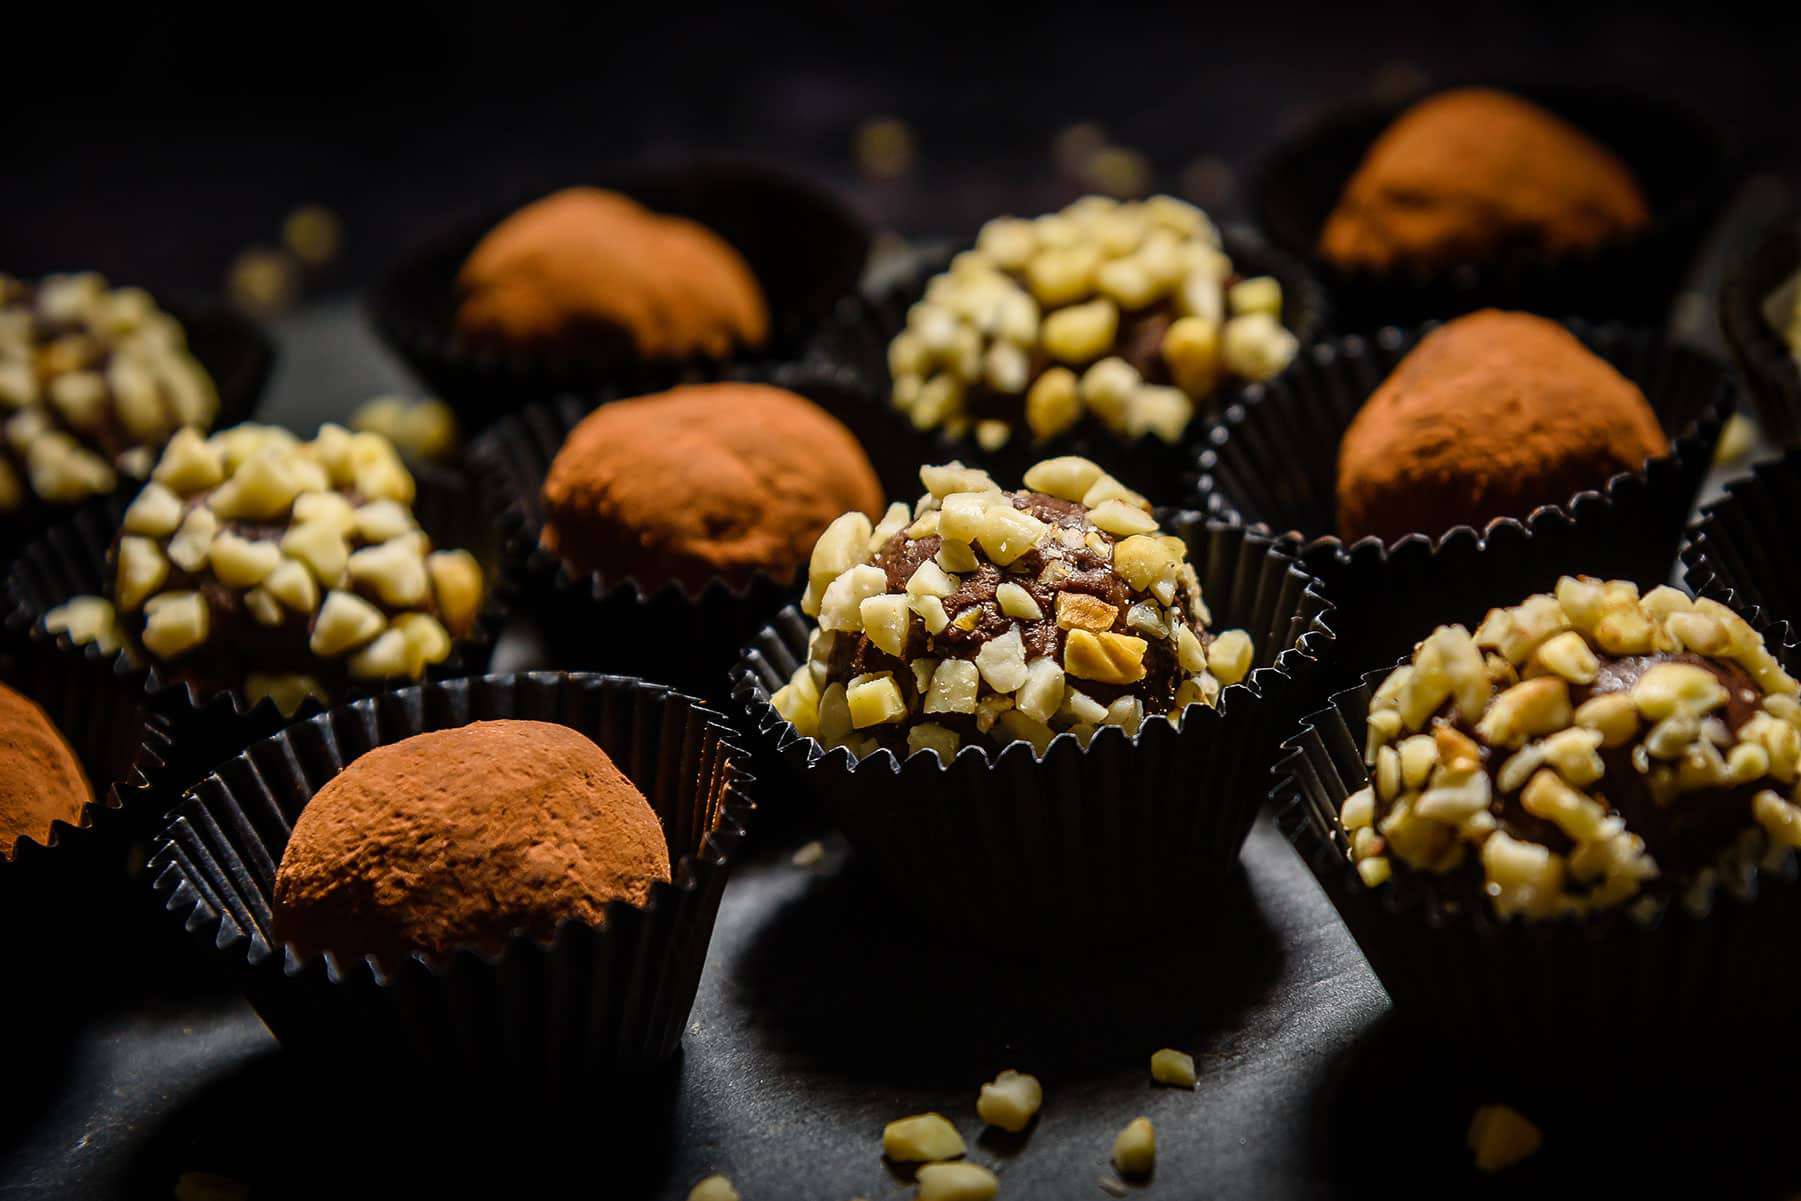 Vegan Chocolate & Peanut-Butter Truffles on Serving Plate